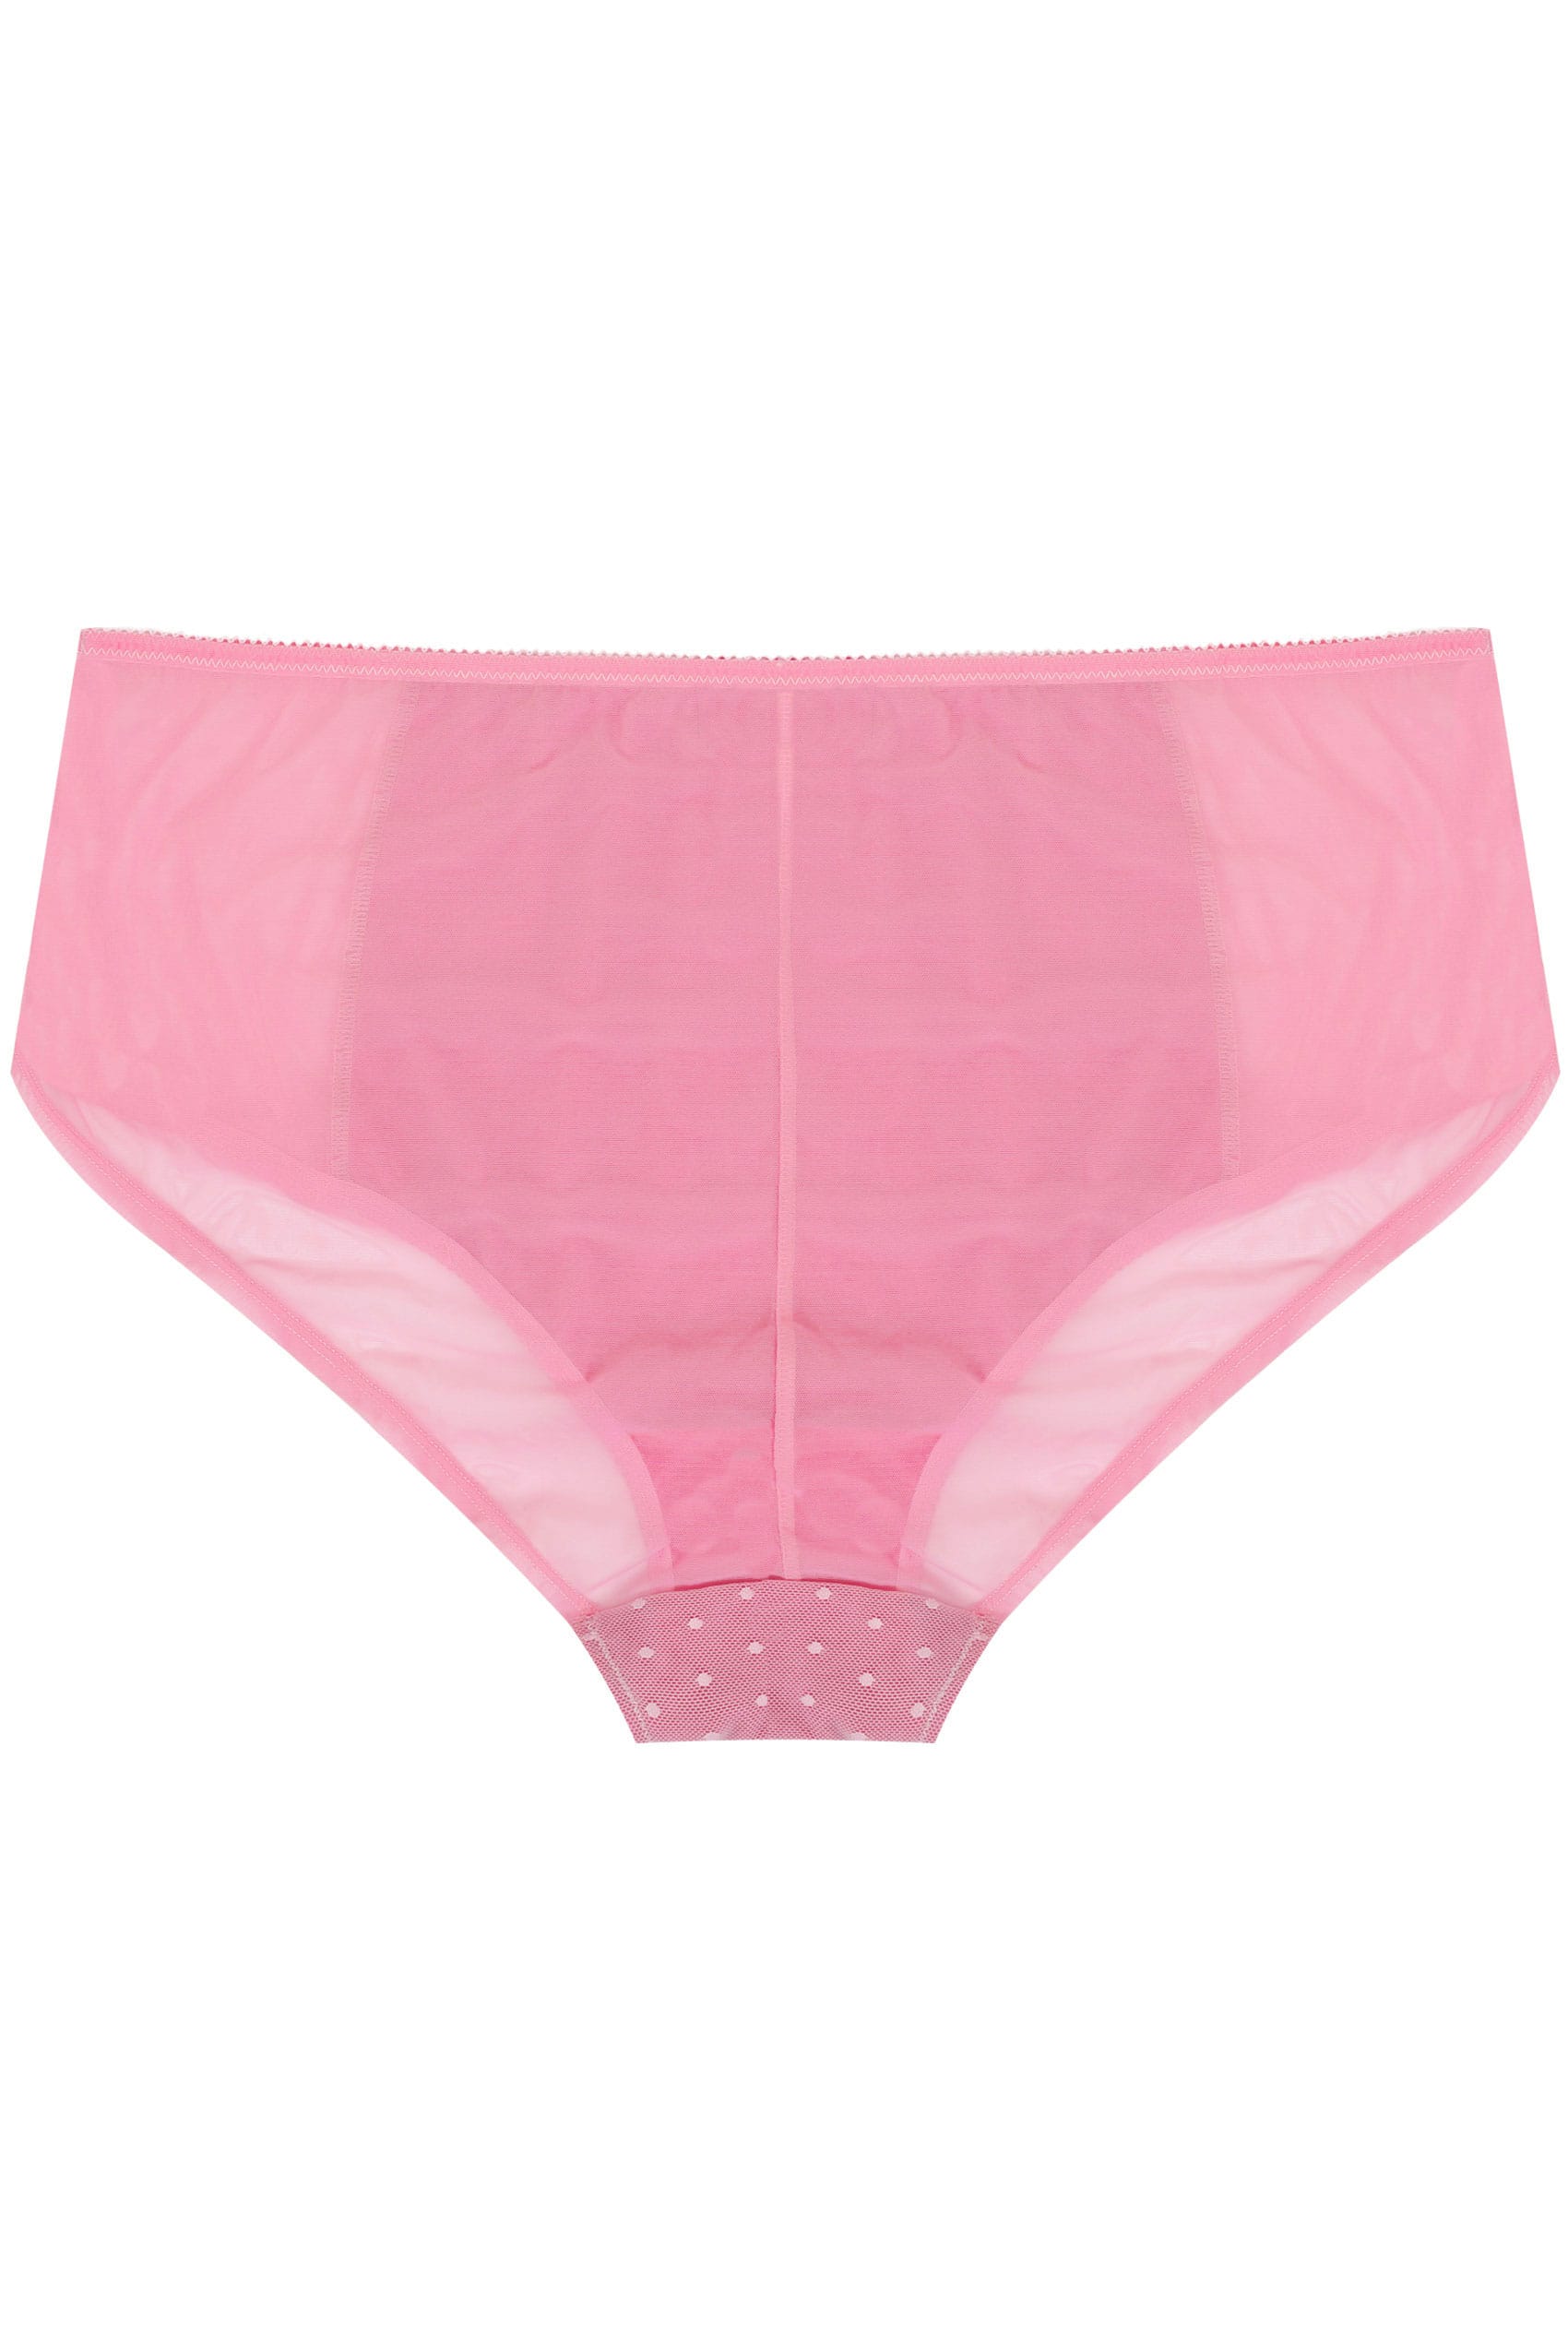 Pink Mini Spot Mesh Briefs Plus Size 16 To 36